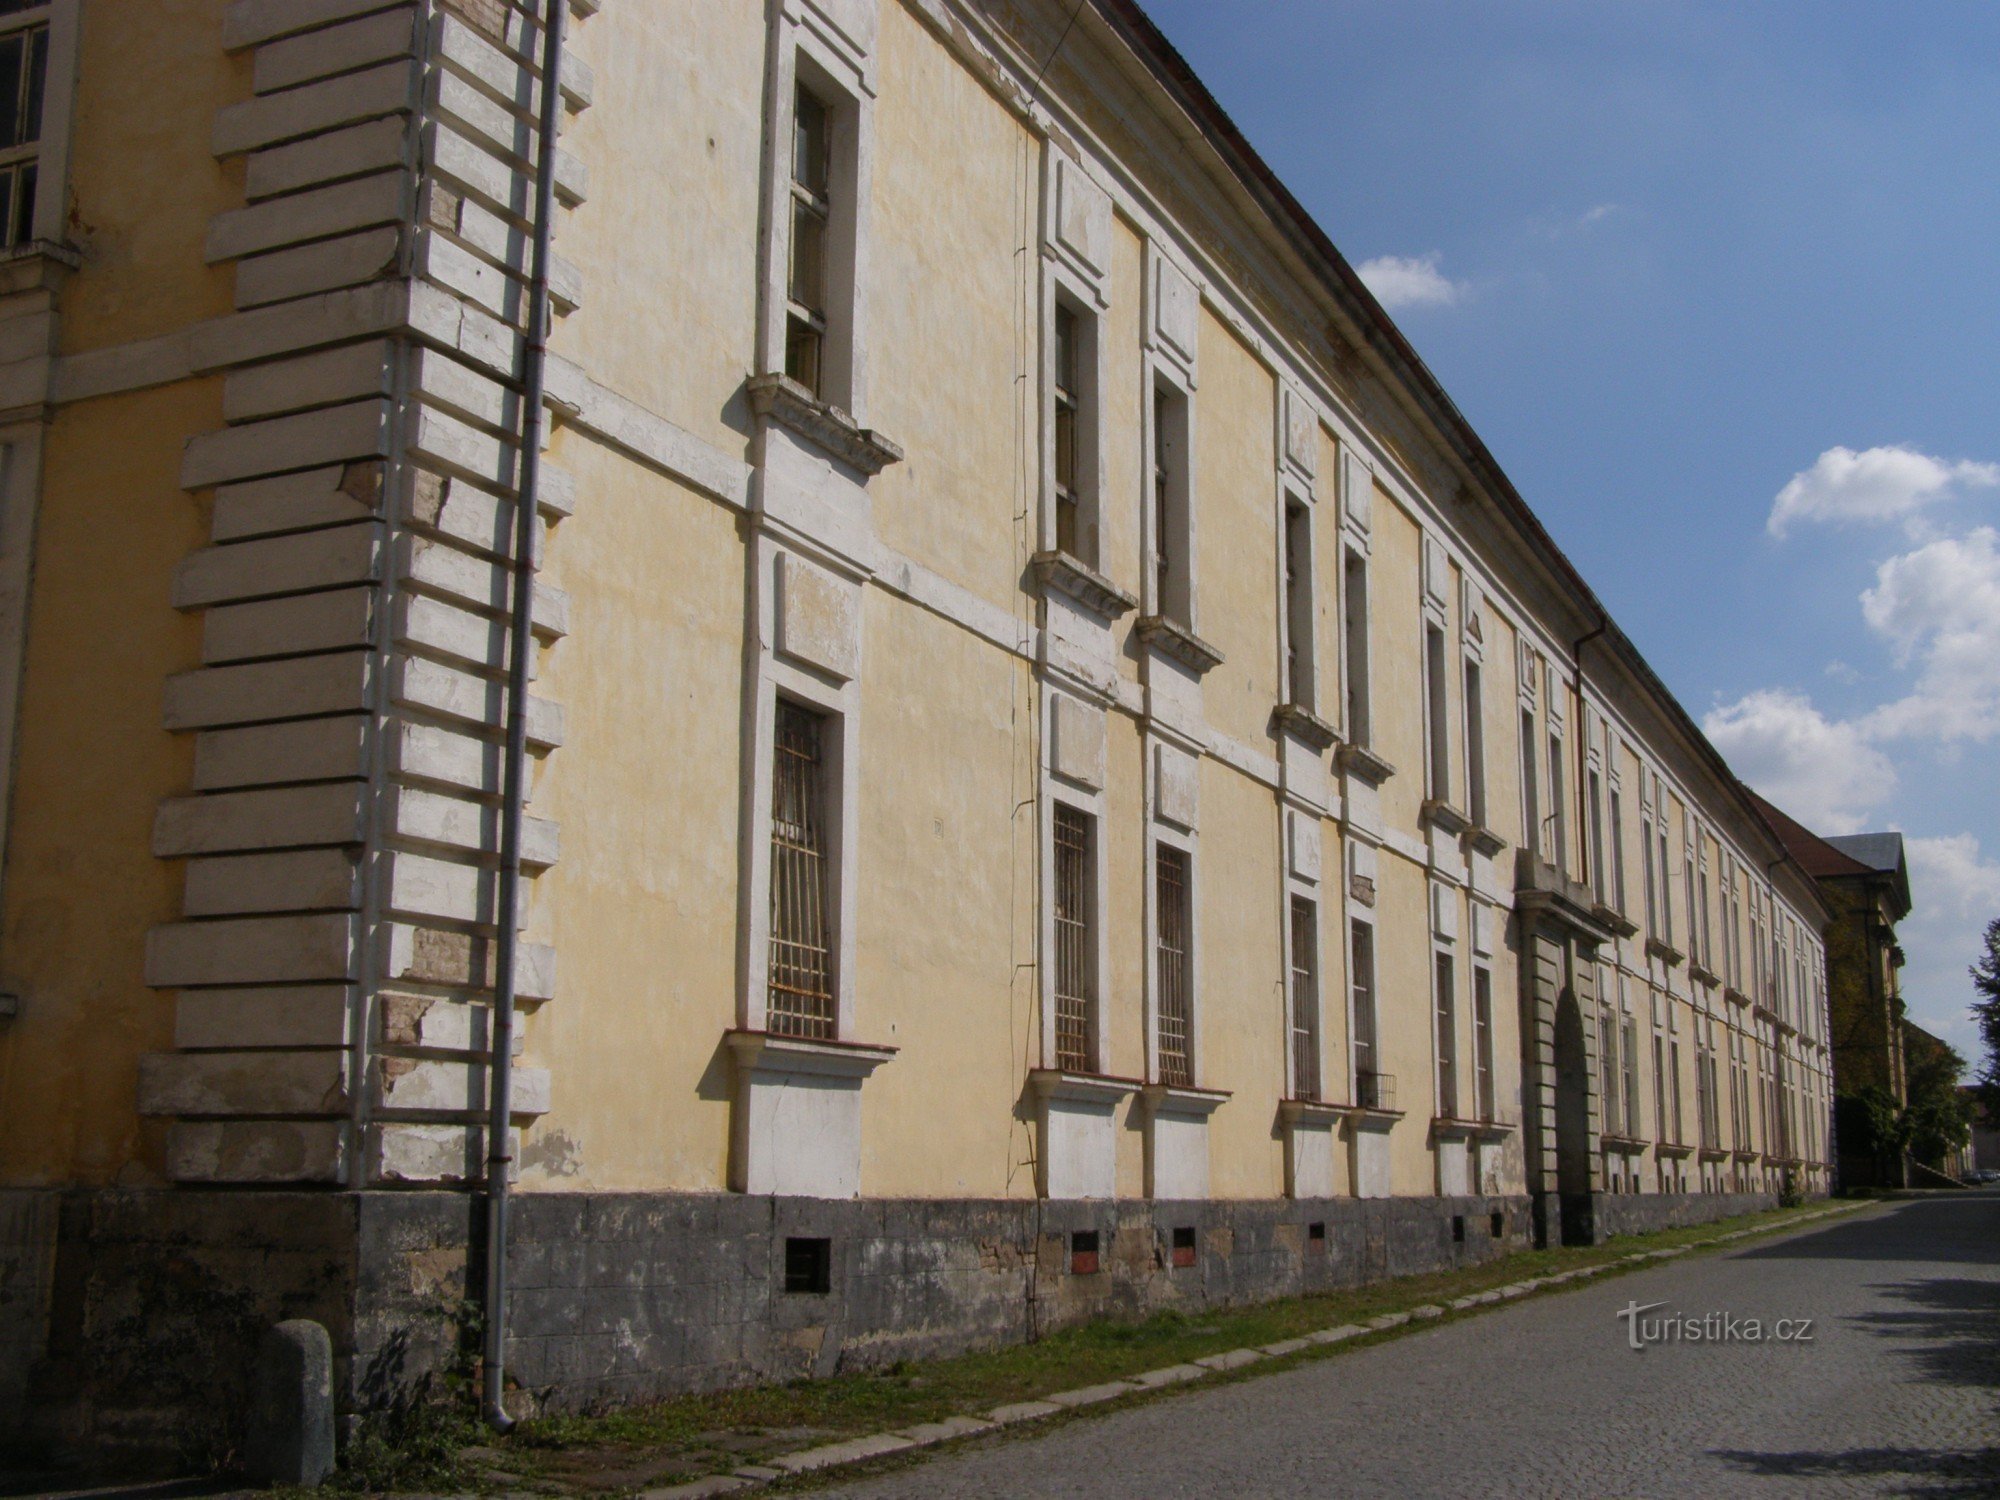 Josefov - former military hospital